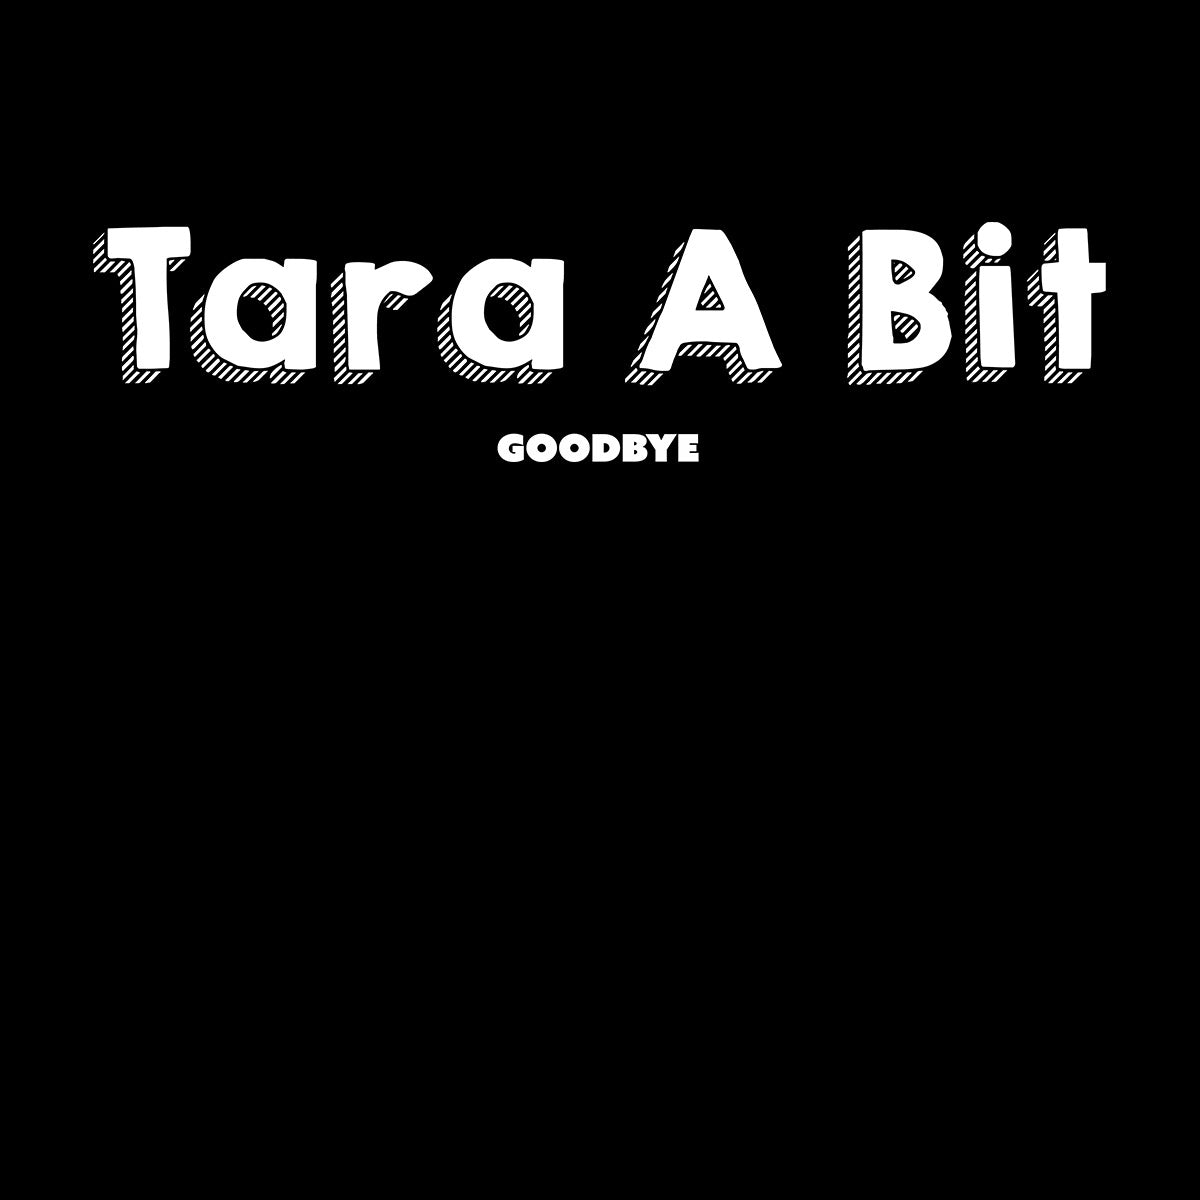 Tara A Bit Black Country Dialect T-shirt Funny Novelty Tees Unisex Tee - Kuzi Tees